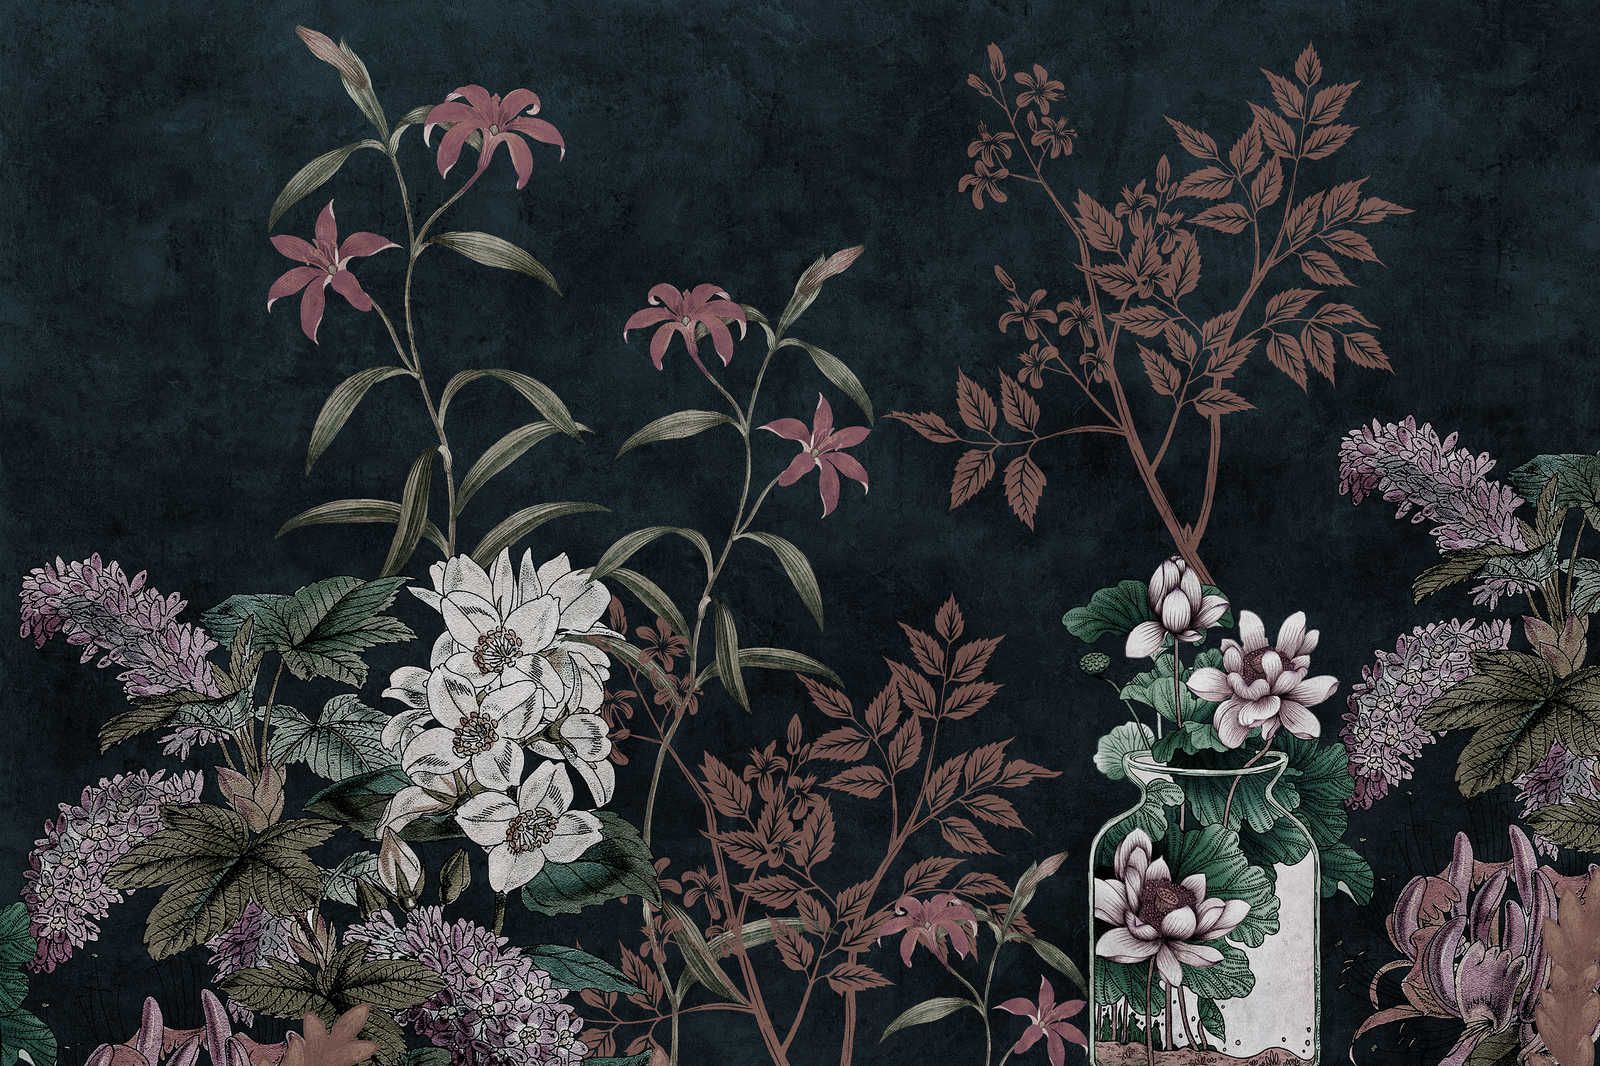             Dark Room 2 - Zwart Canvas Schilderij Botanisch Patroon Roze - 0.90 m x 0.60 m
        